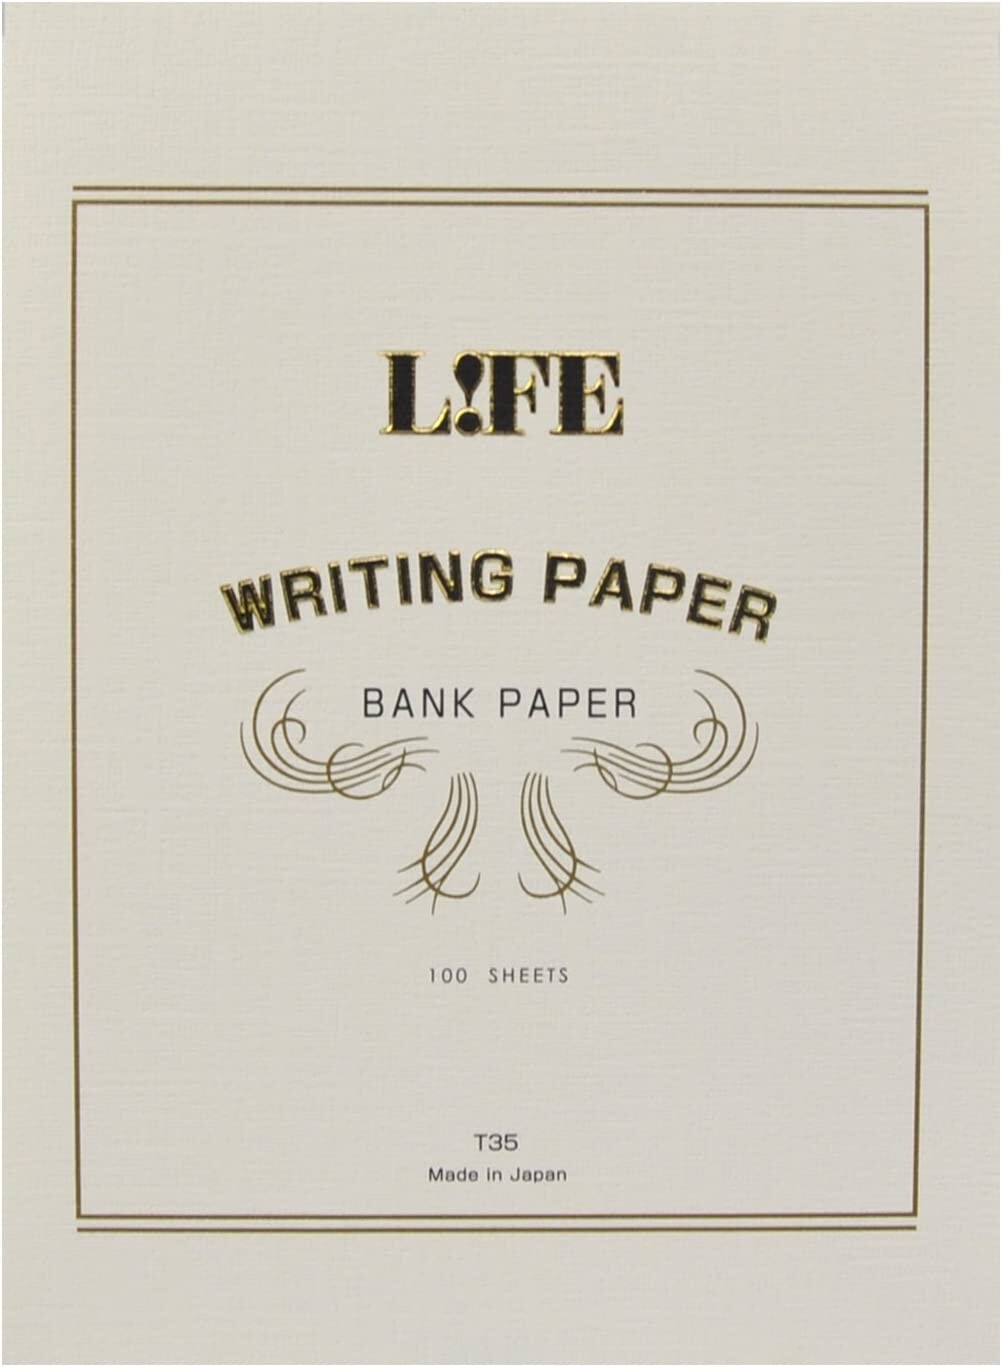 Writing Paper - Bank Paper 100 Sheets